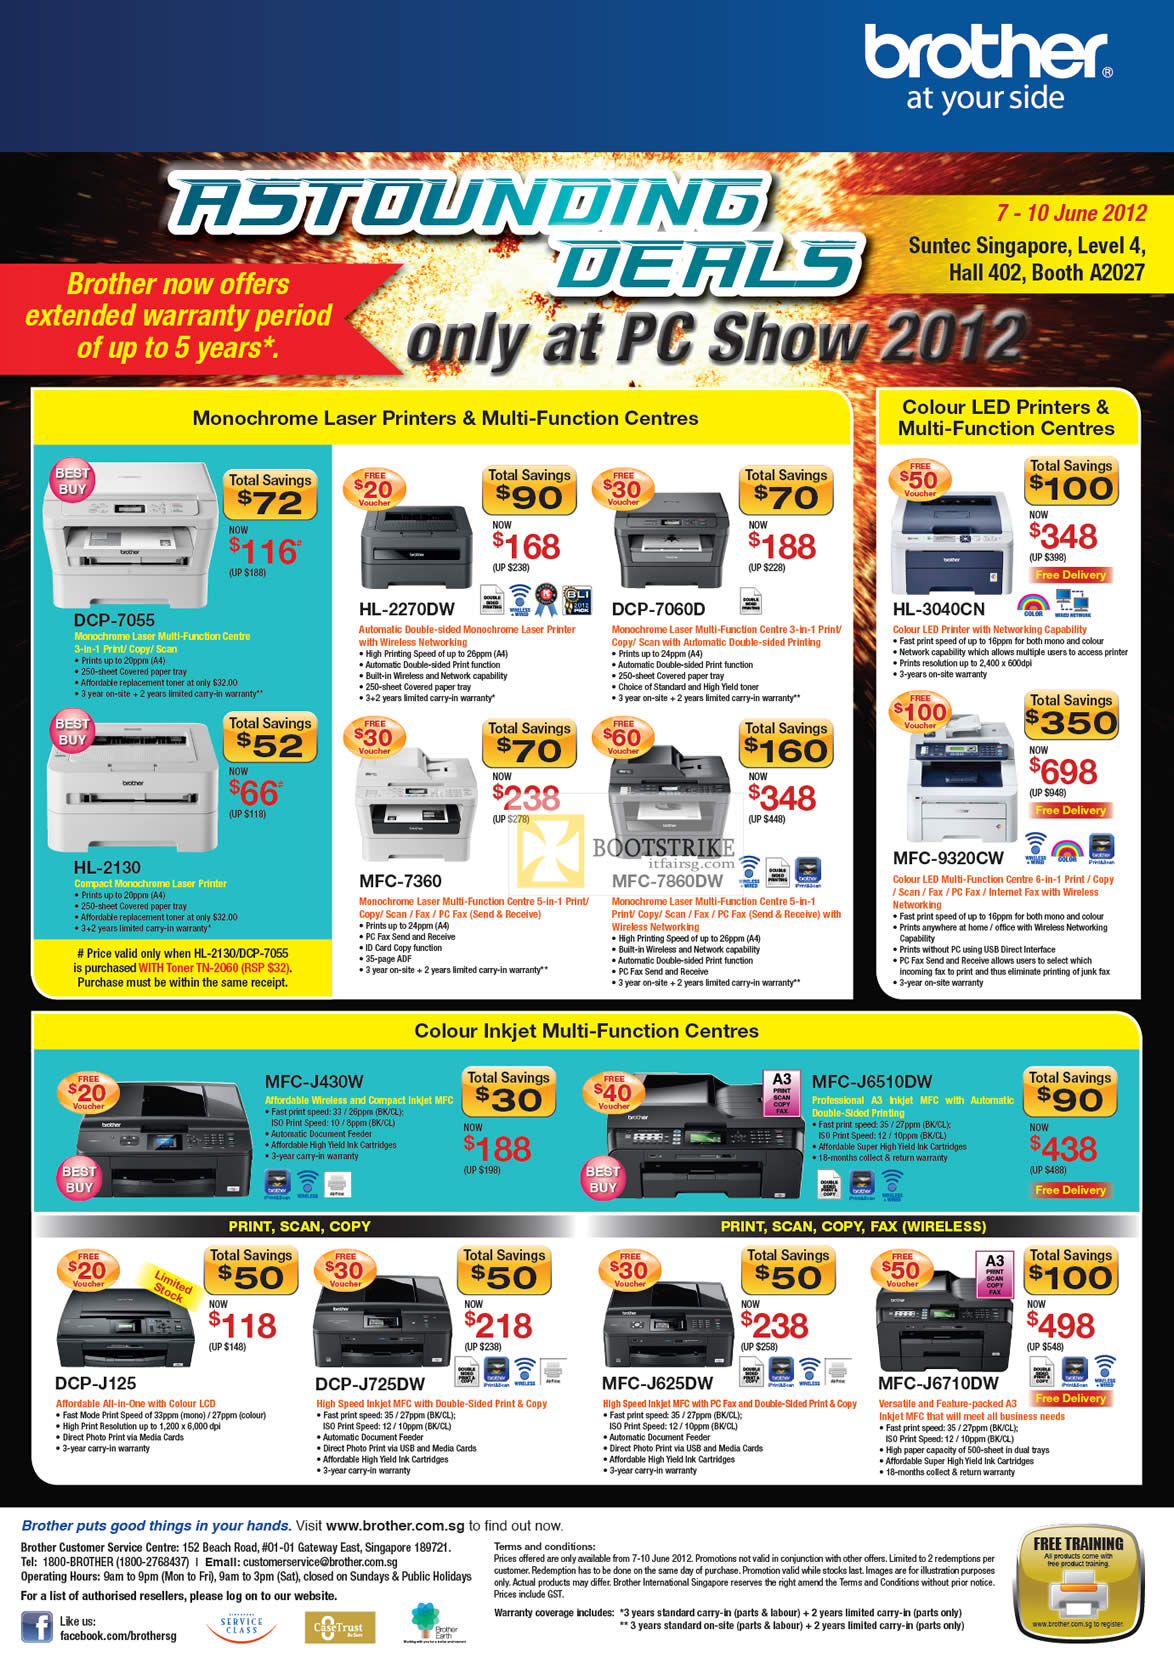 PC SHOW 2012 price list image brochure of Brother Printers Laser LED Inkjet, Colour DCP-7055, HL-2270DW, DCP-7060D, HL-2130, MFC-7360, MFC-7860DW